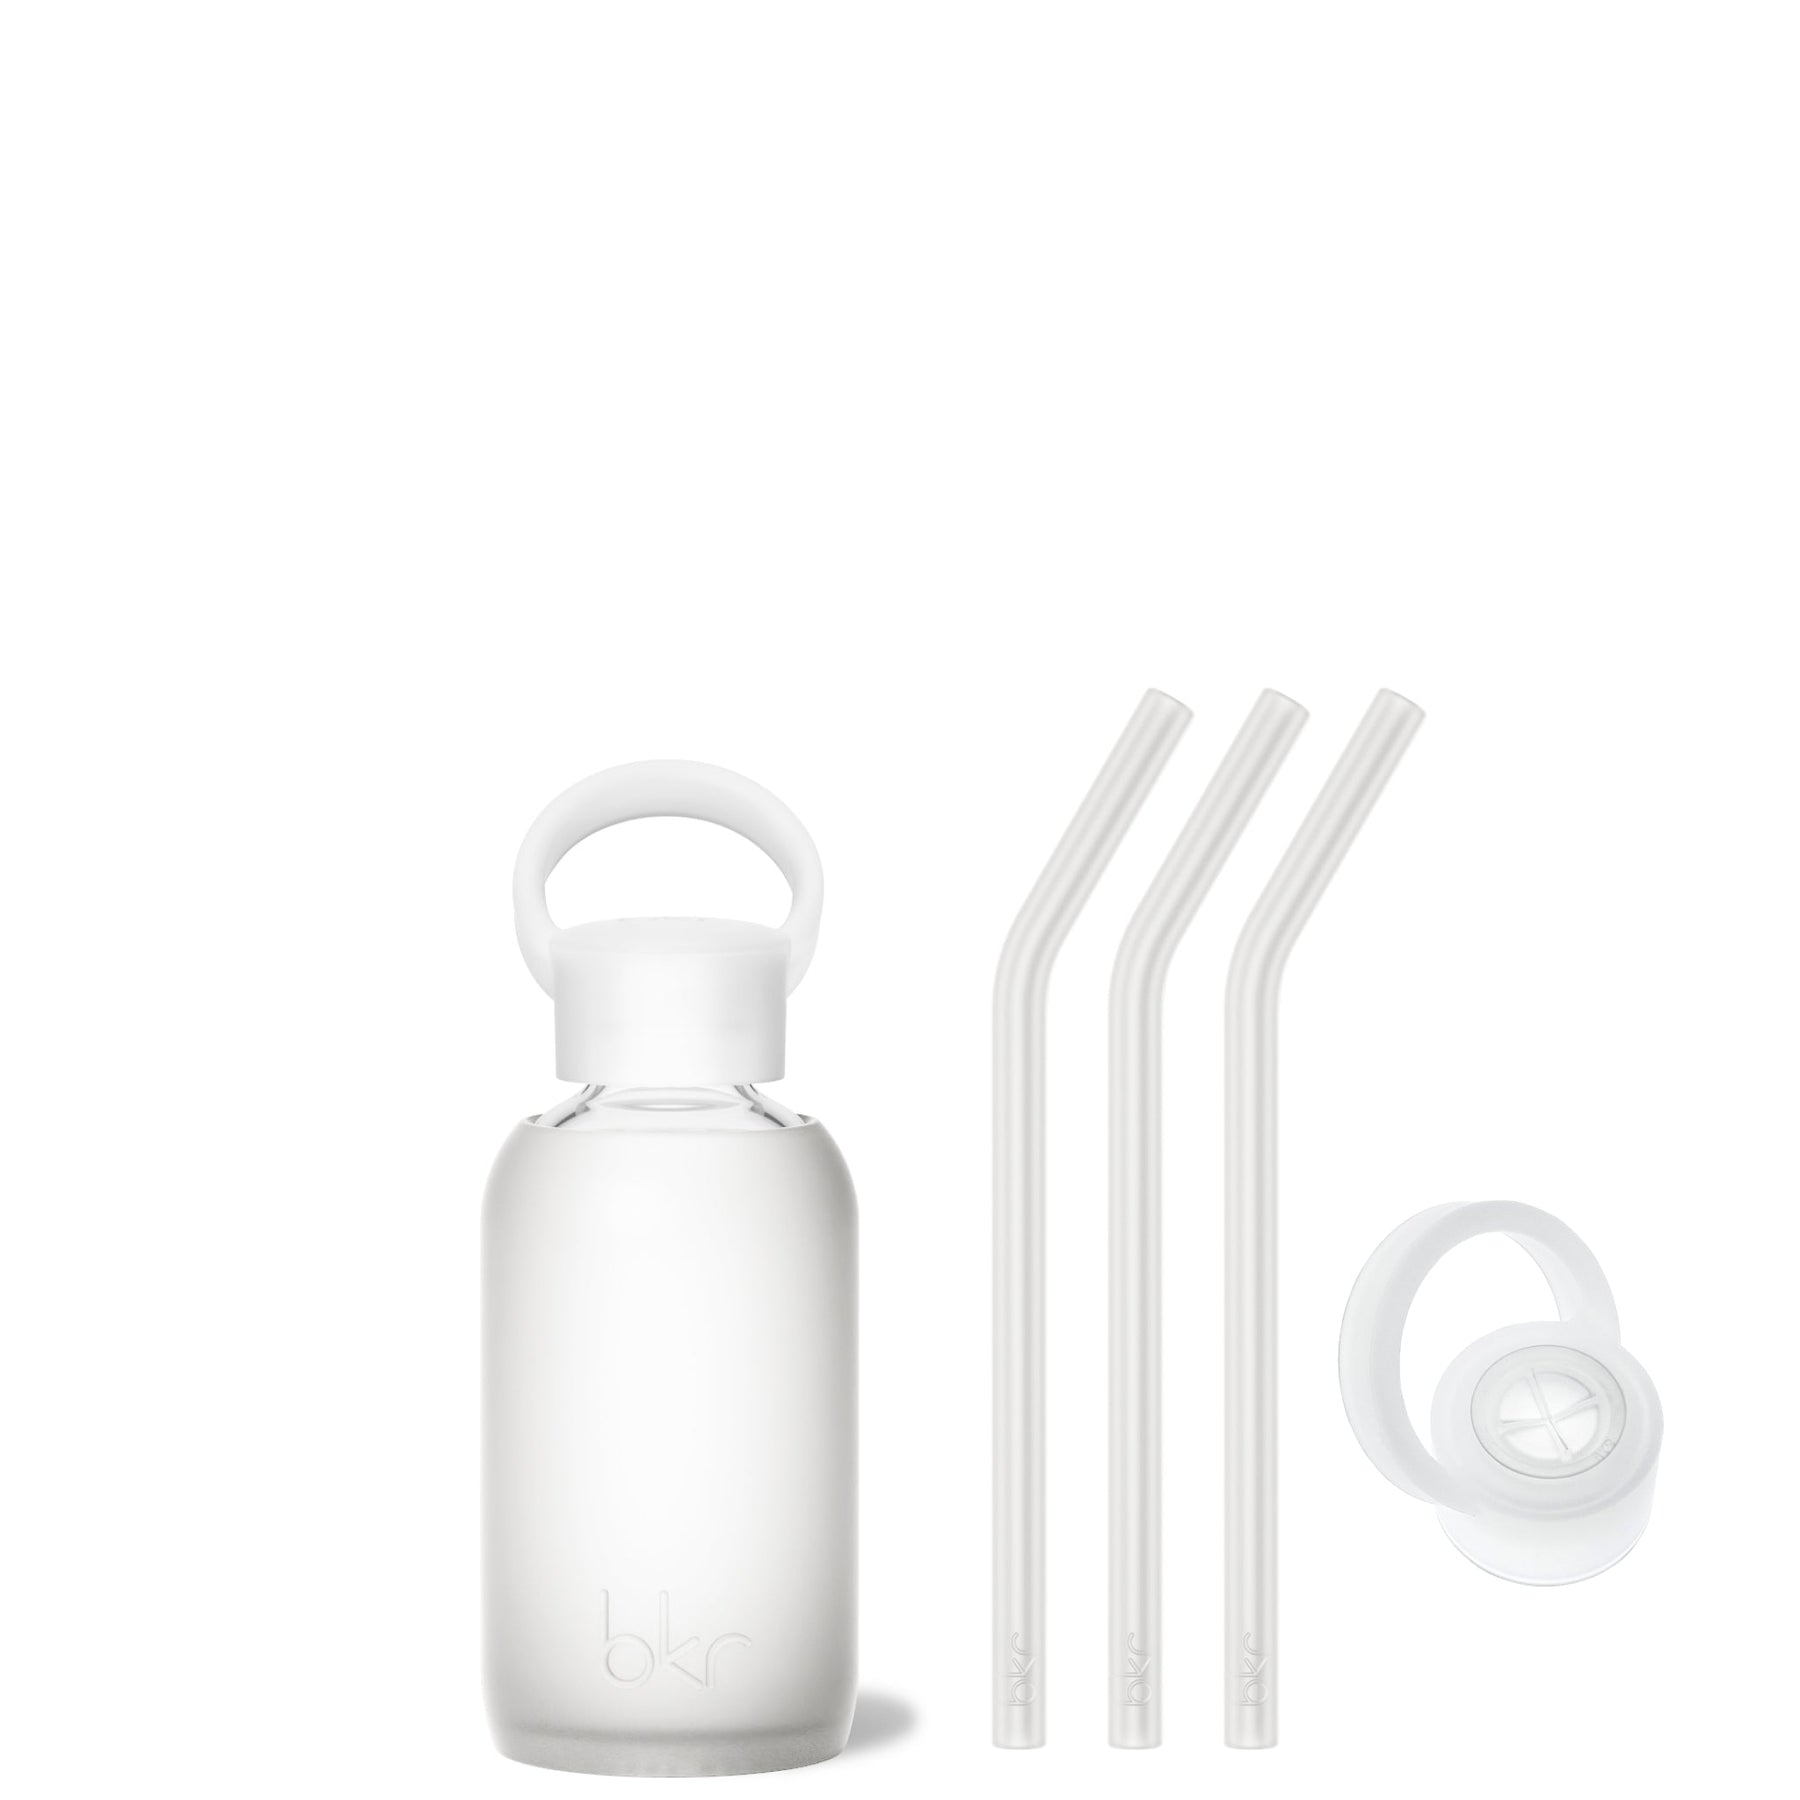 JAMES - TEENY BOTTLE SIP KIT 250ML (8 OZ) - Sip Kit: Silicone Straw + Cap +  Glass Water Bottle: 8oz